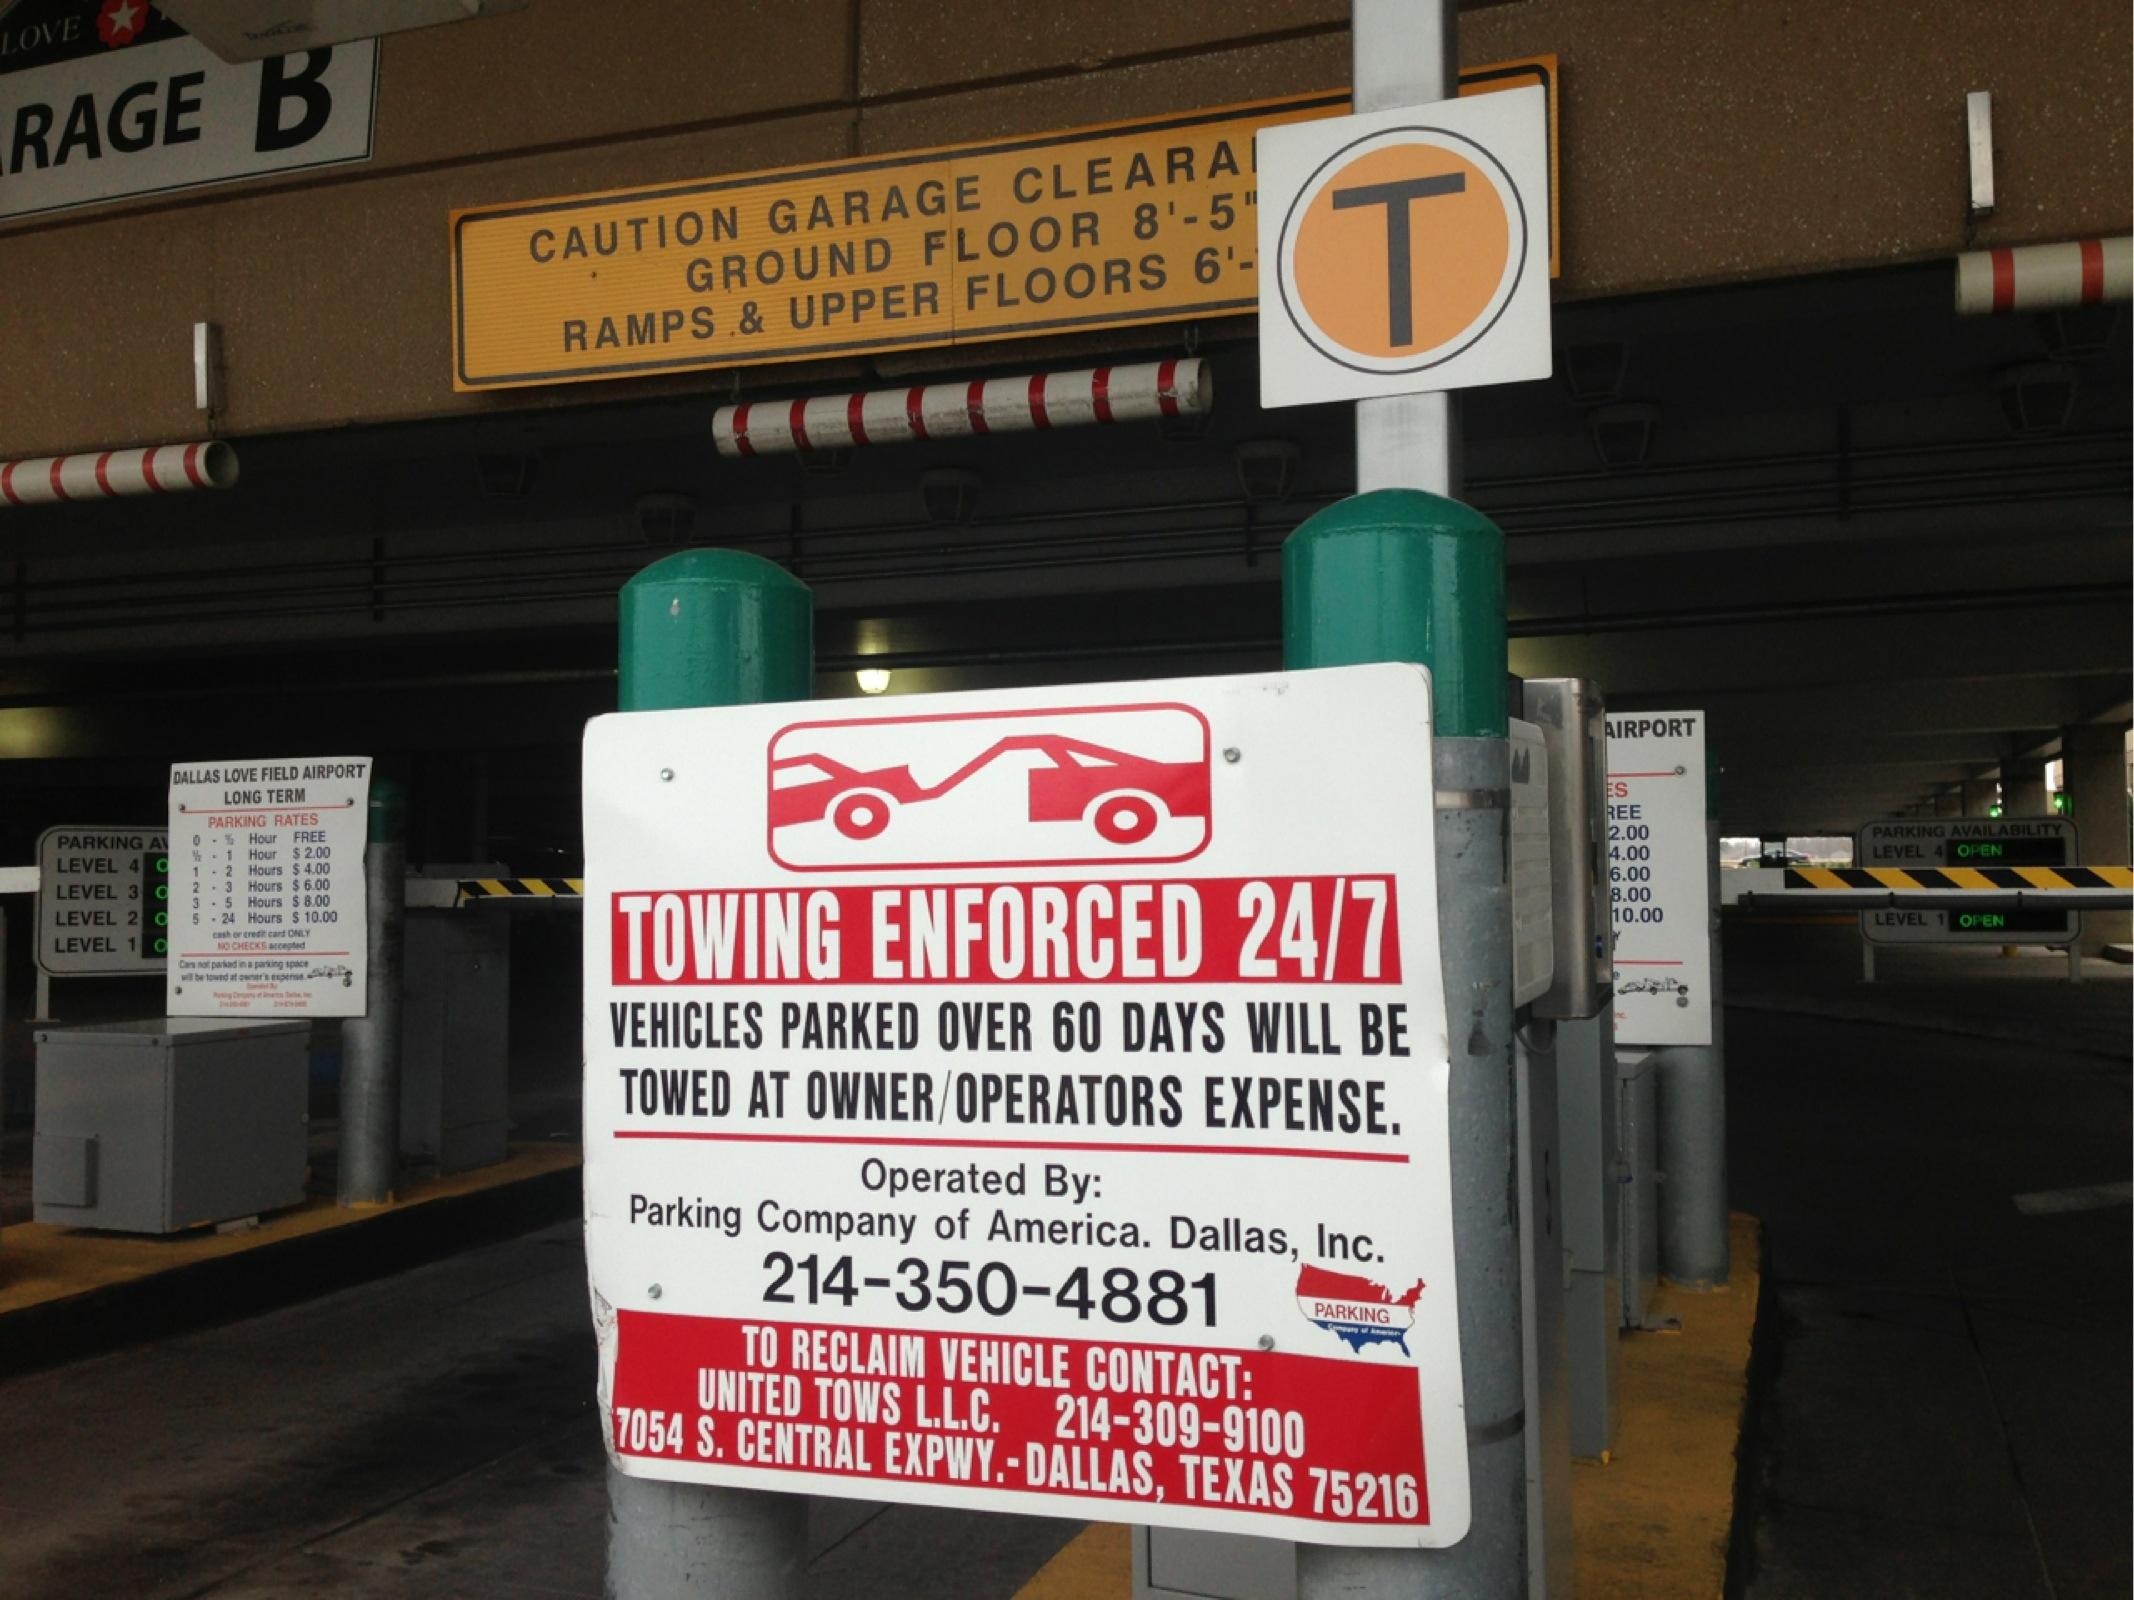 China Misterioso retirada DAL - Garage B - Parking in Dallas | ParkMe